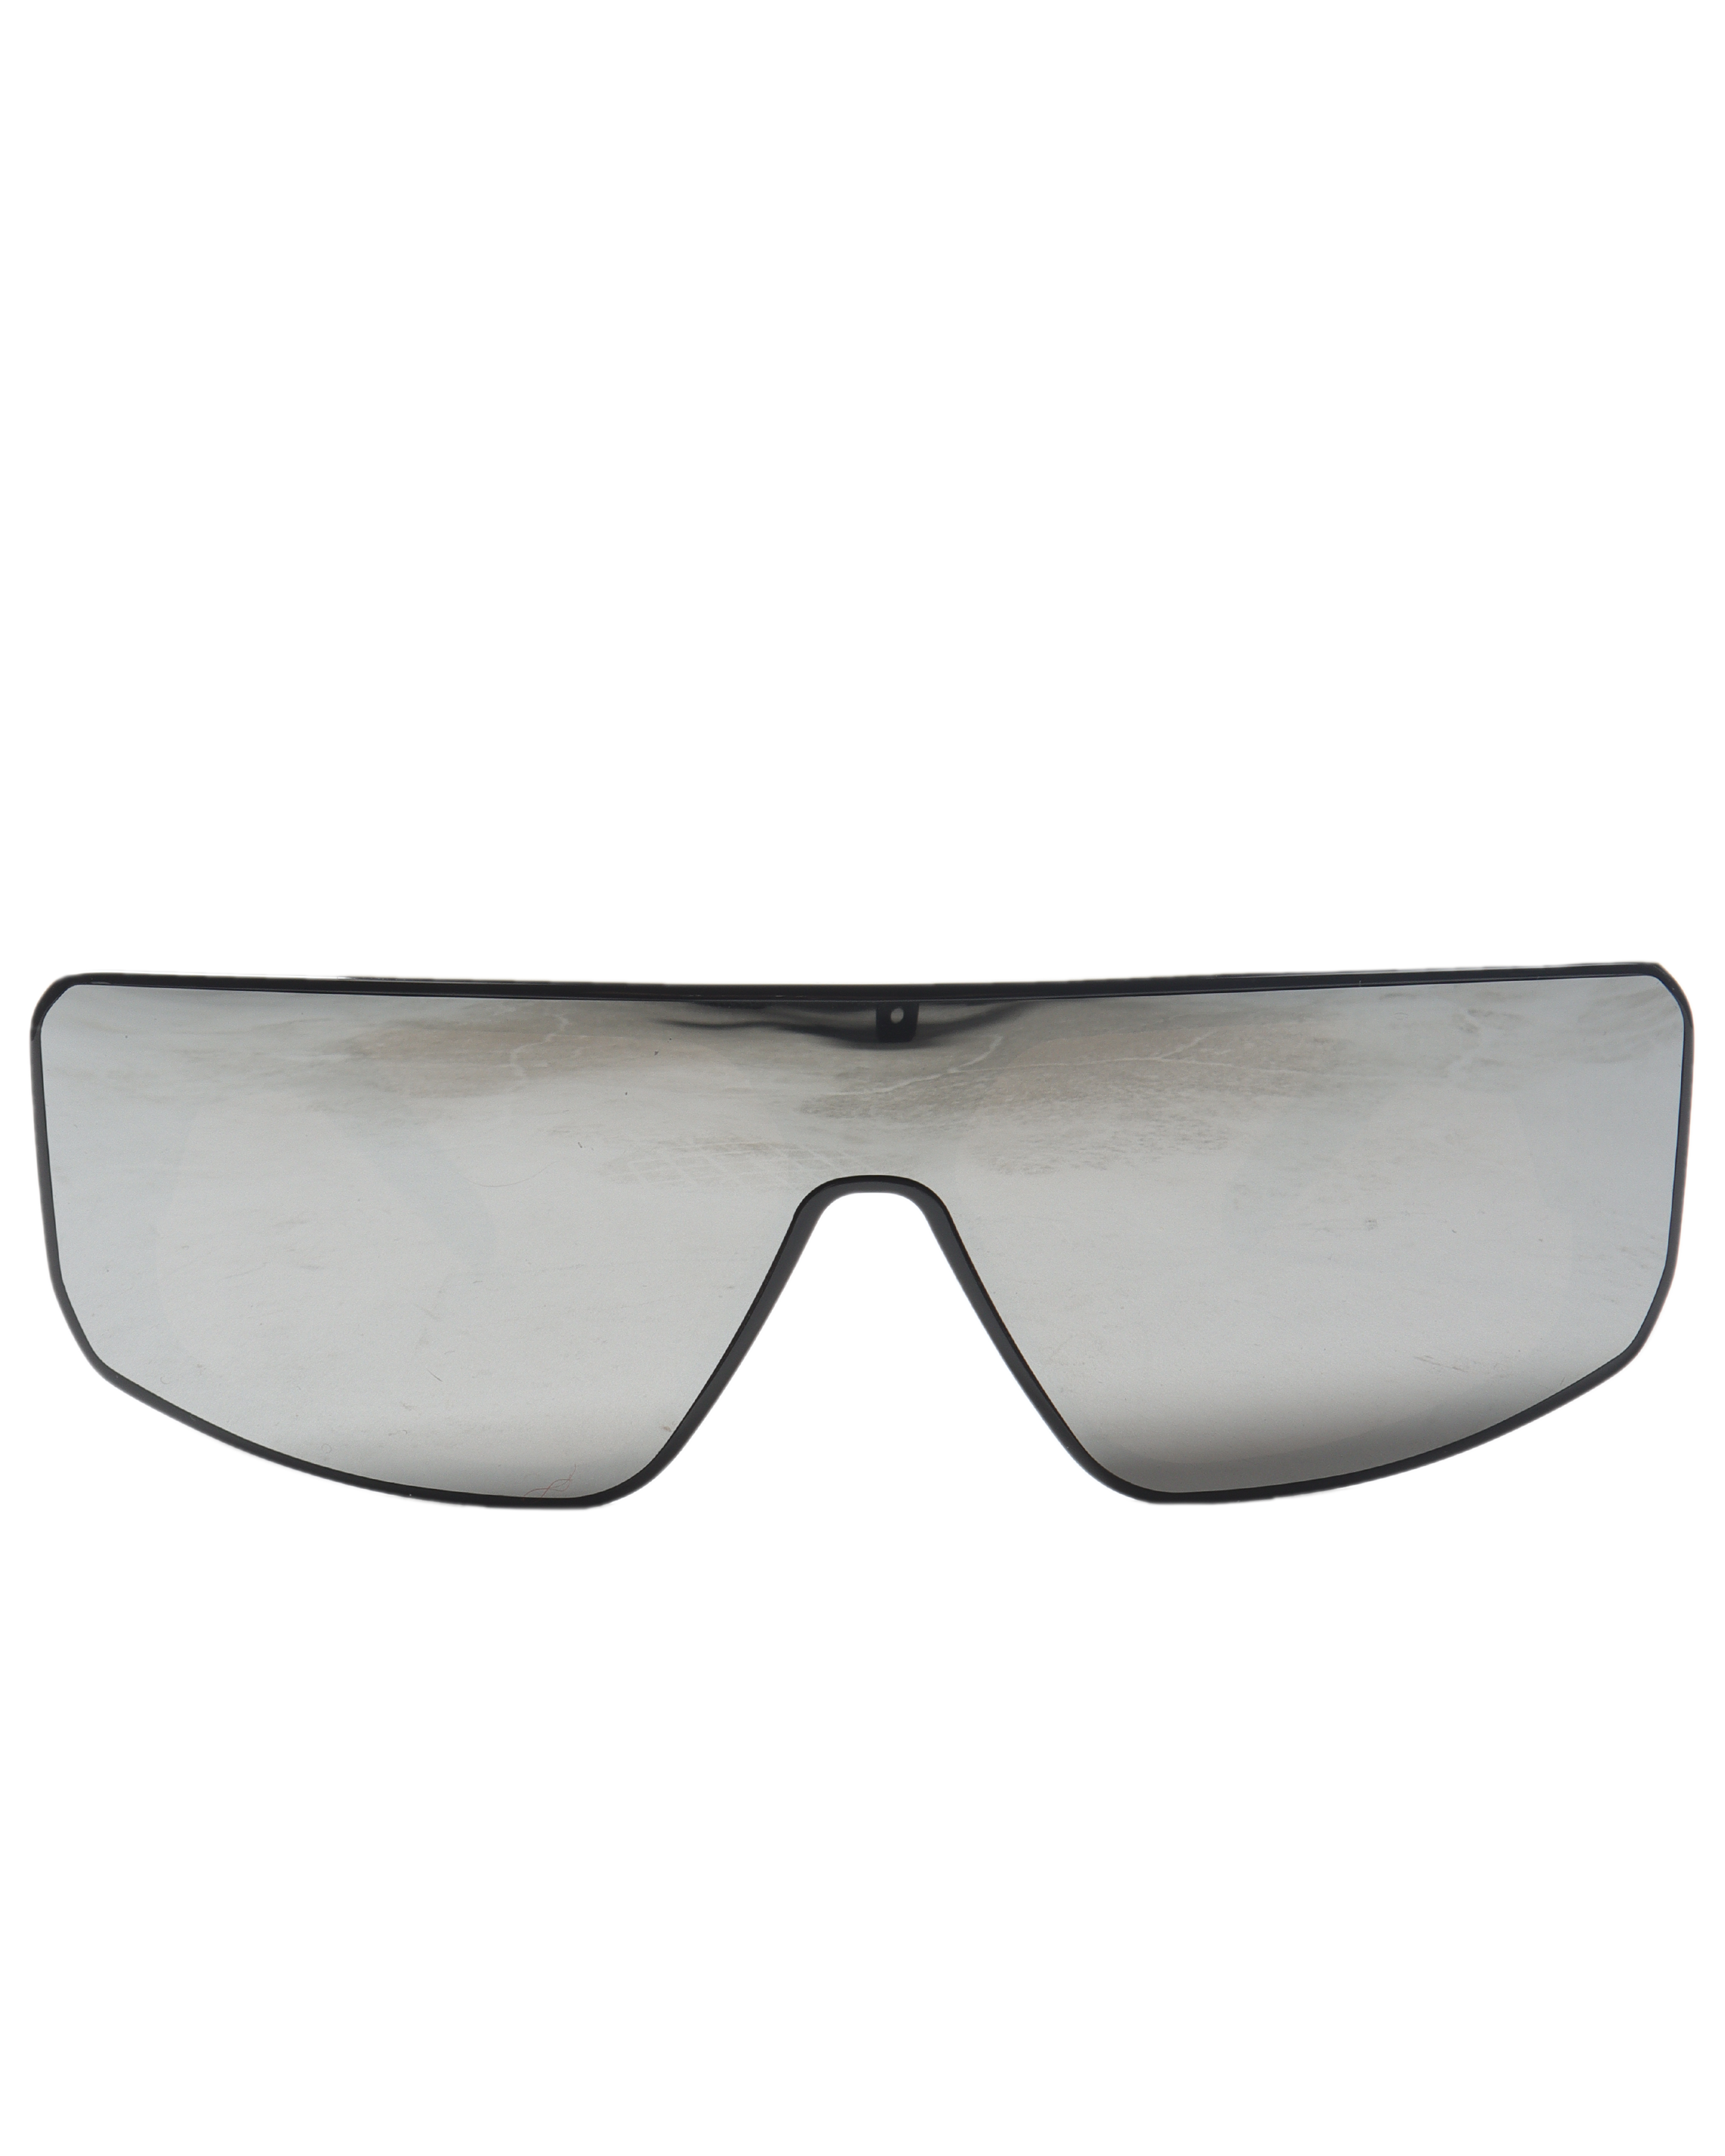 FW20 "PERFORMA" Silver Reflective Sunglasses